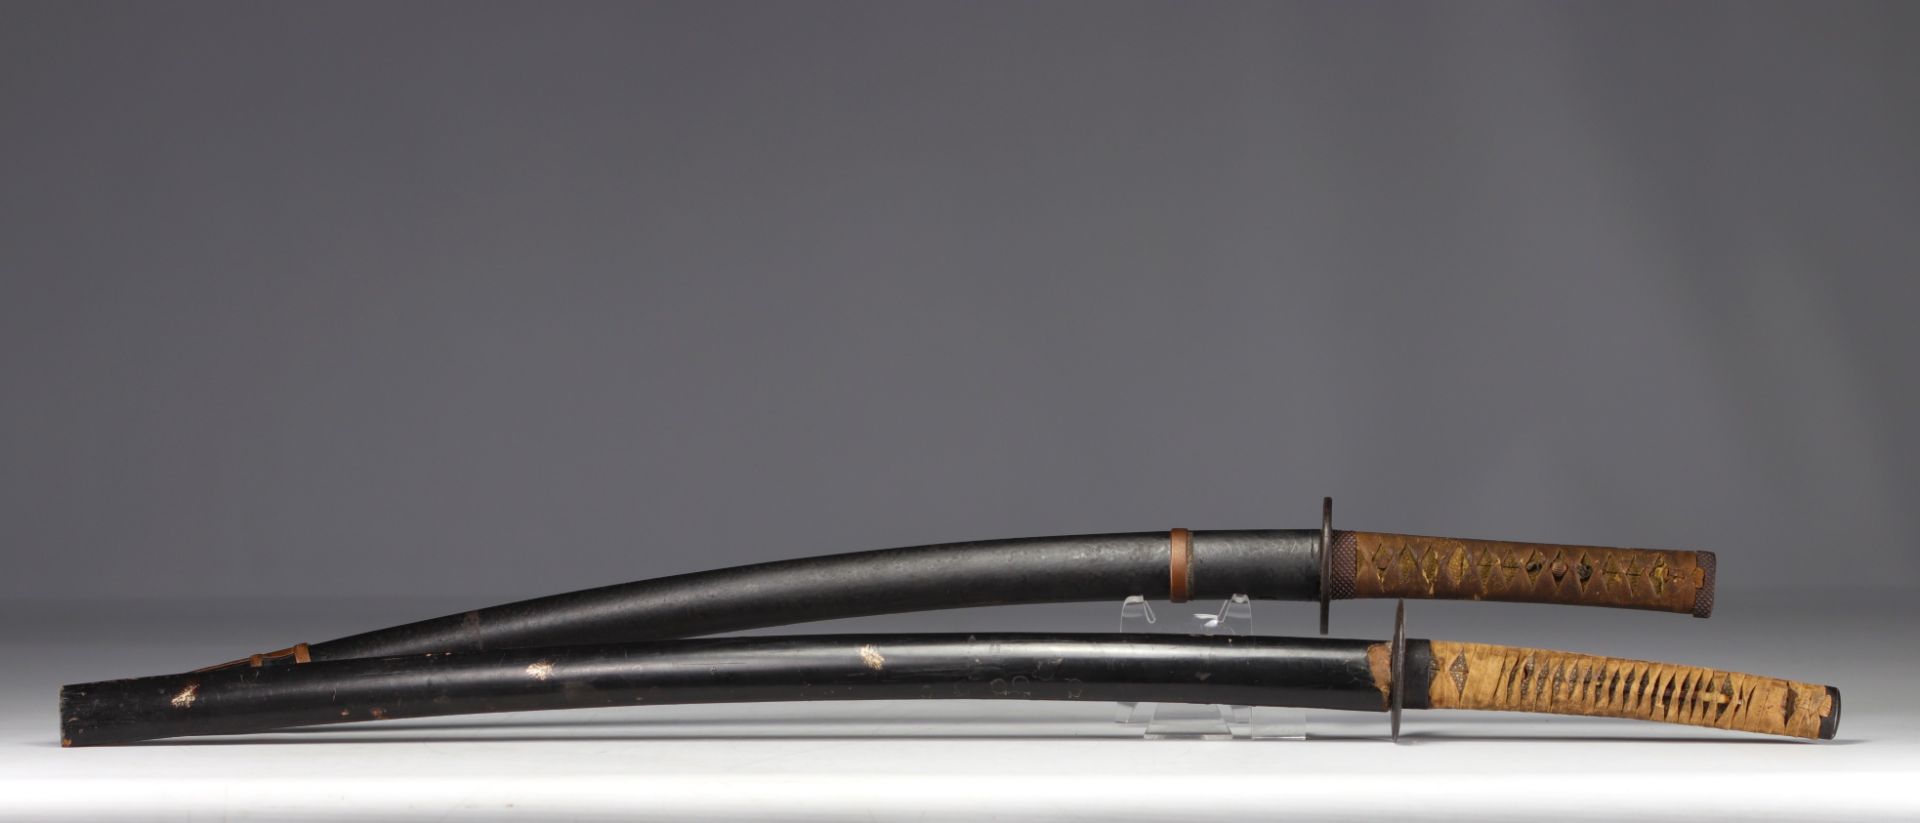 Japan - Set of two "Katanas" swords from Edo period.